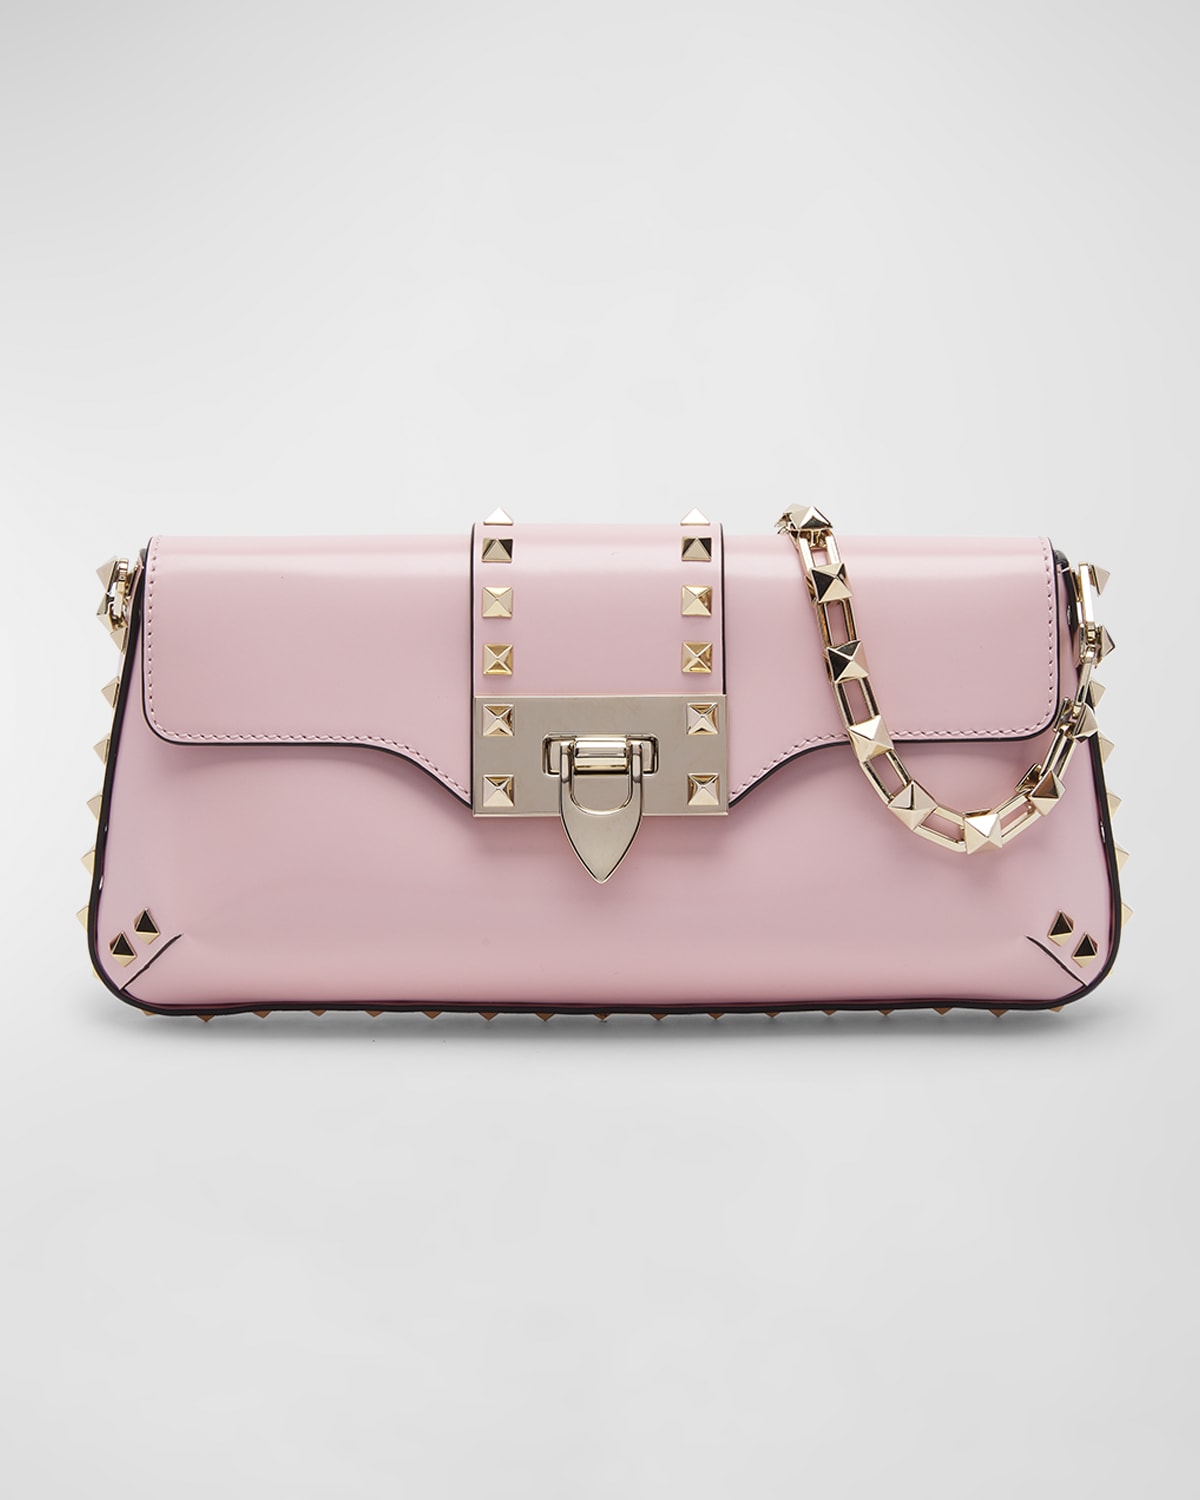 VALENTINO Rockstud Leather Clutch Bag Pink